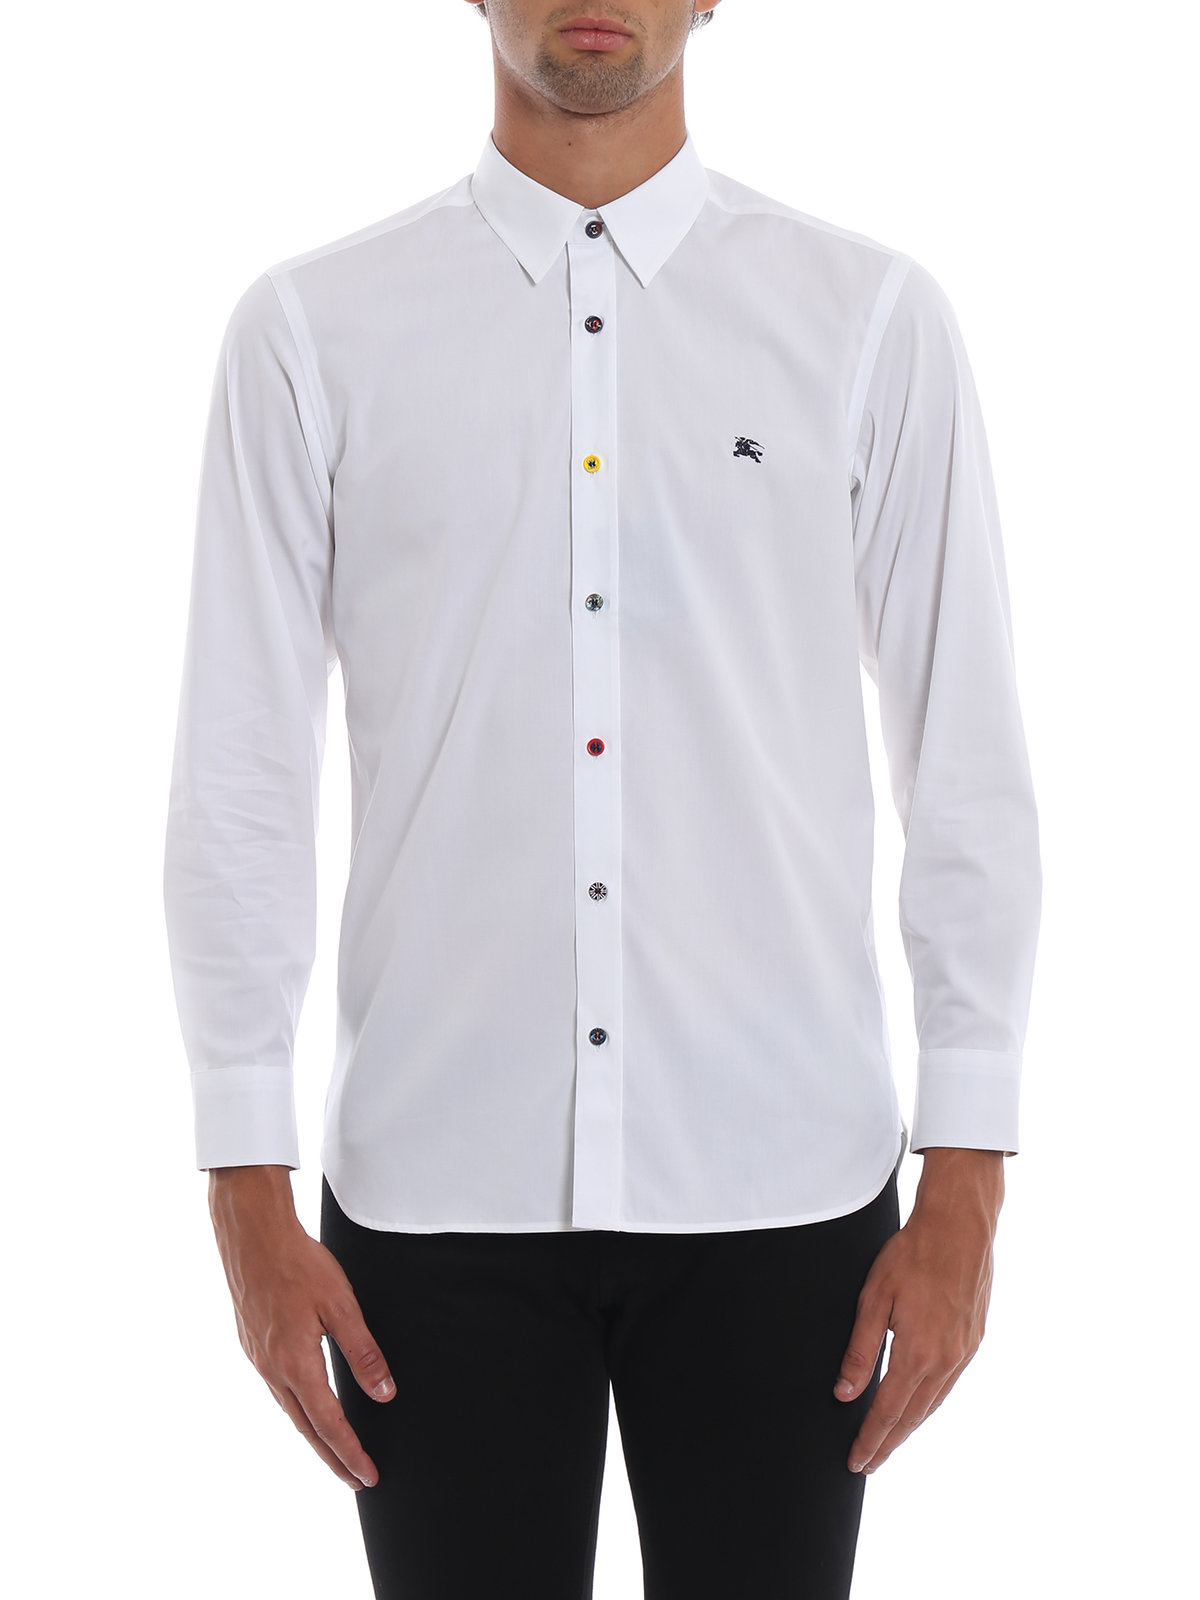 William white shirt with multicolour 